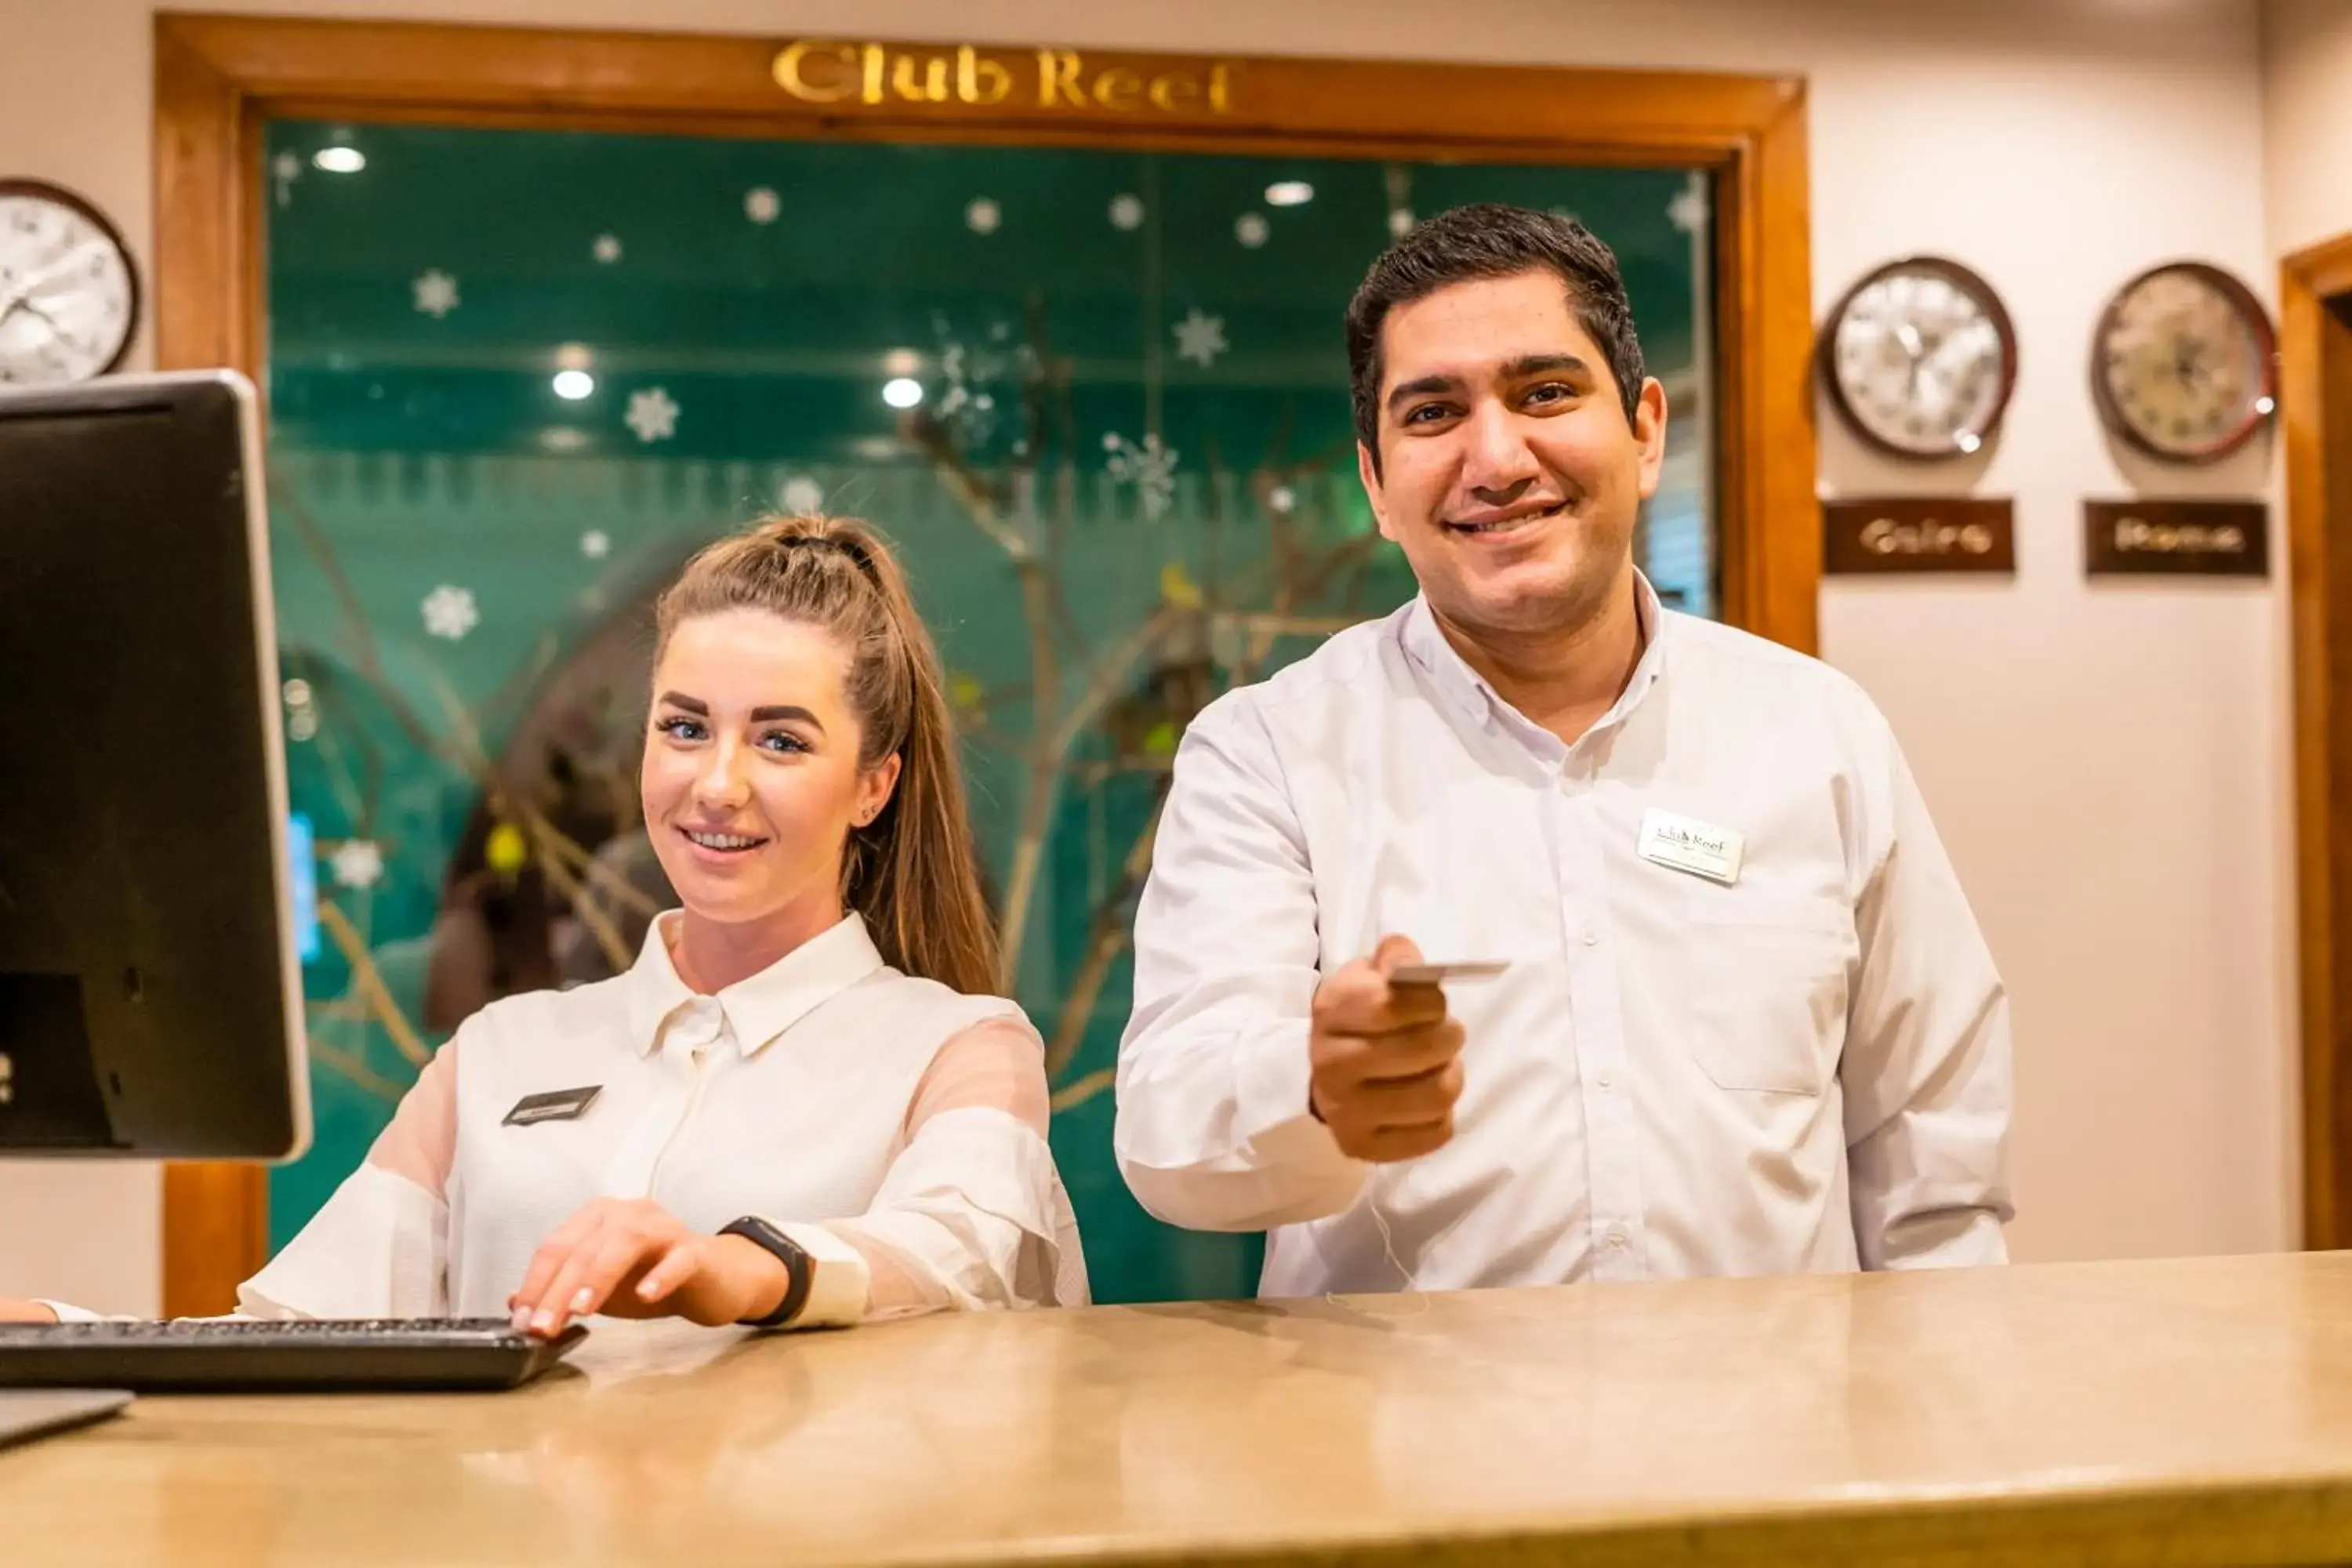 Staff in Club Reef Resort